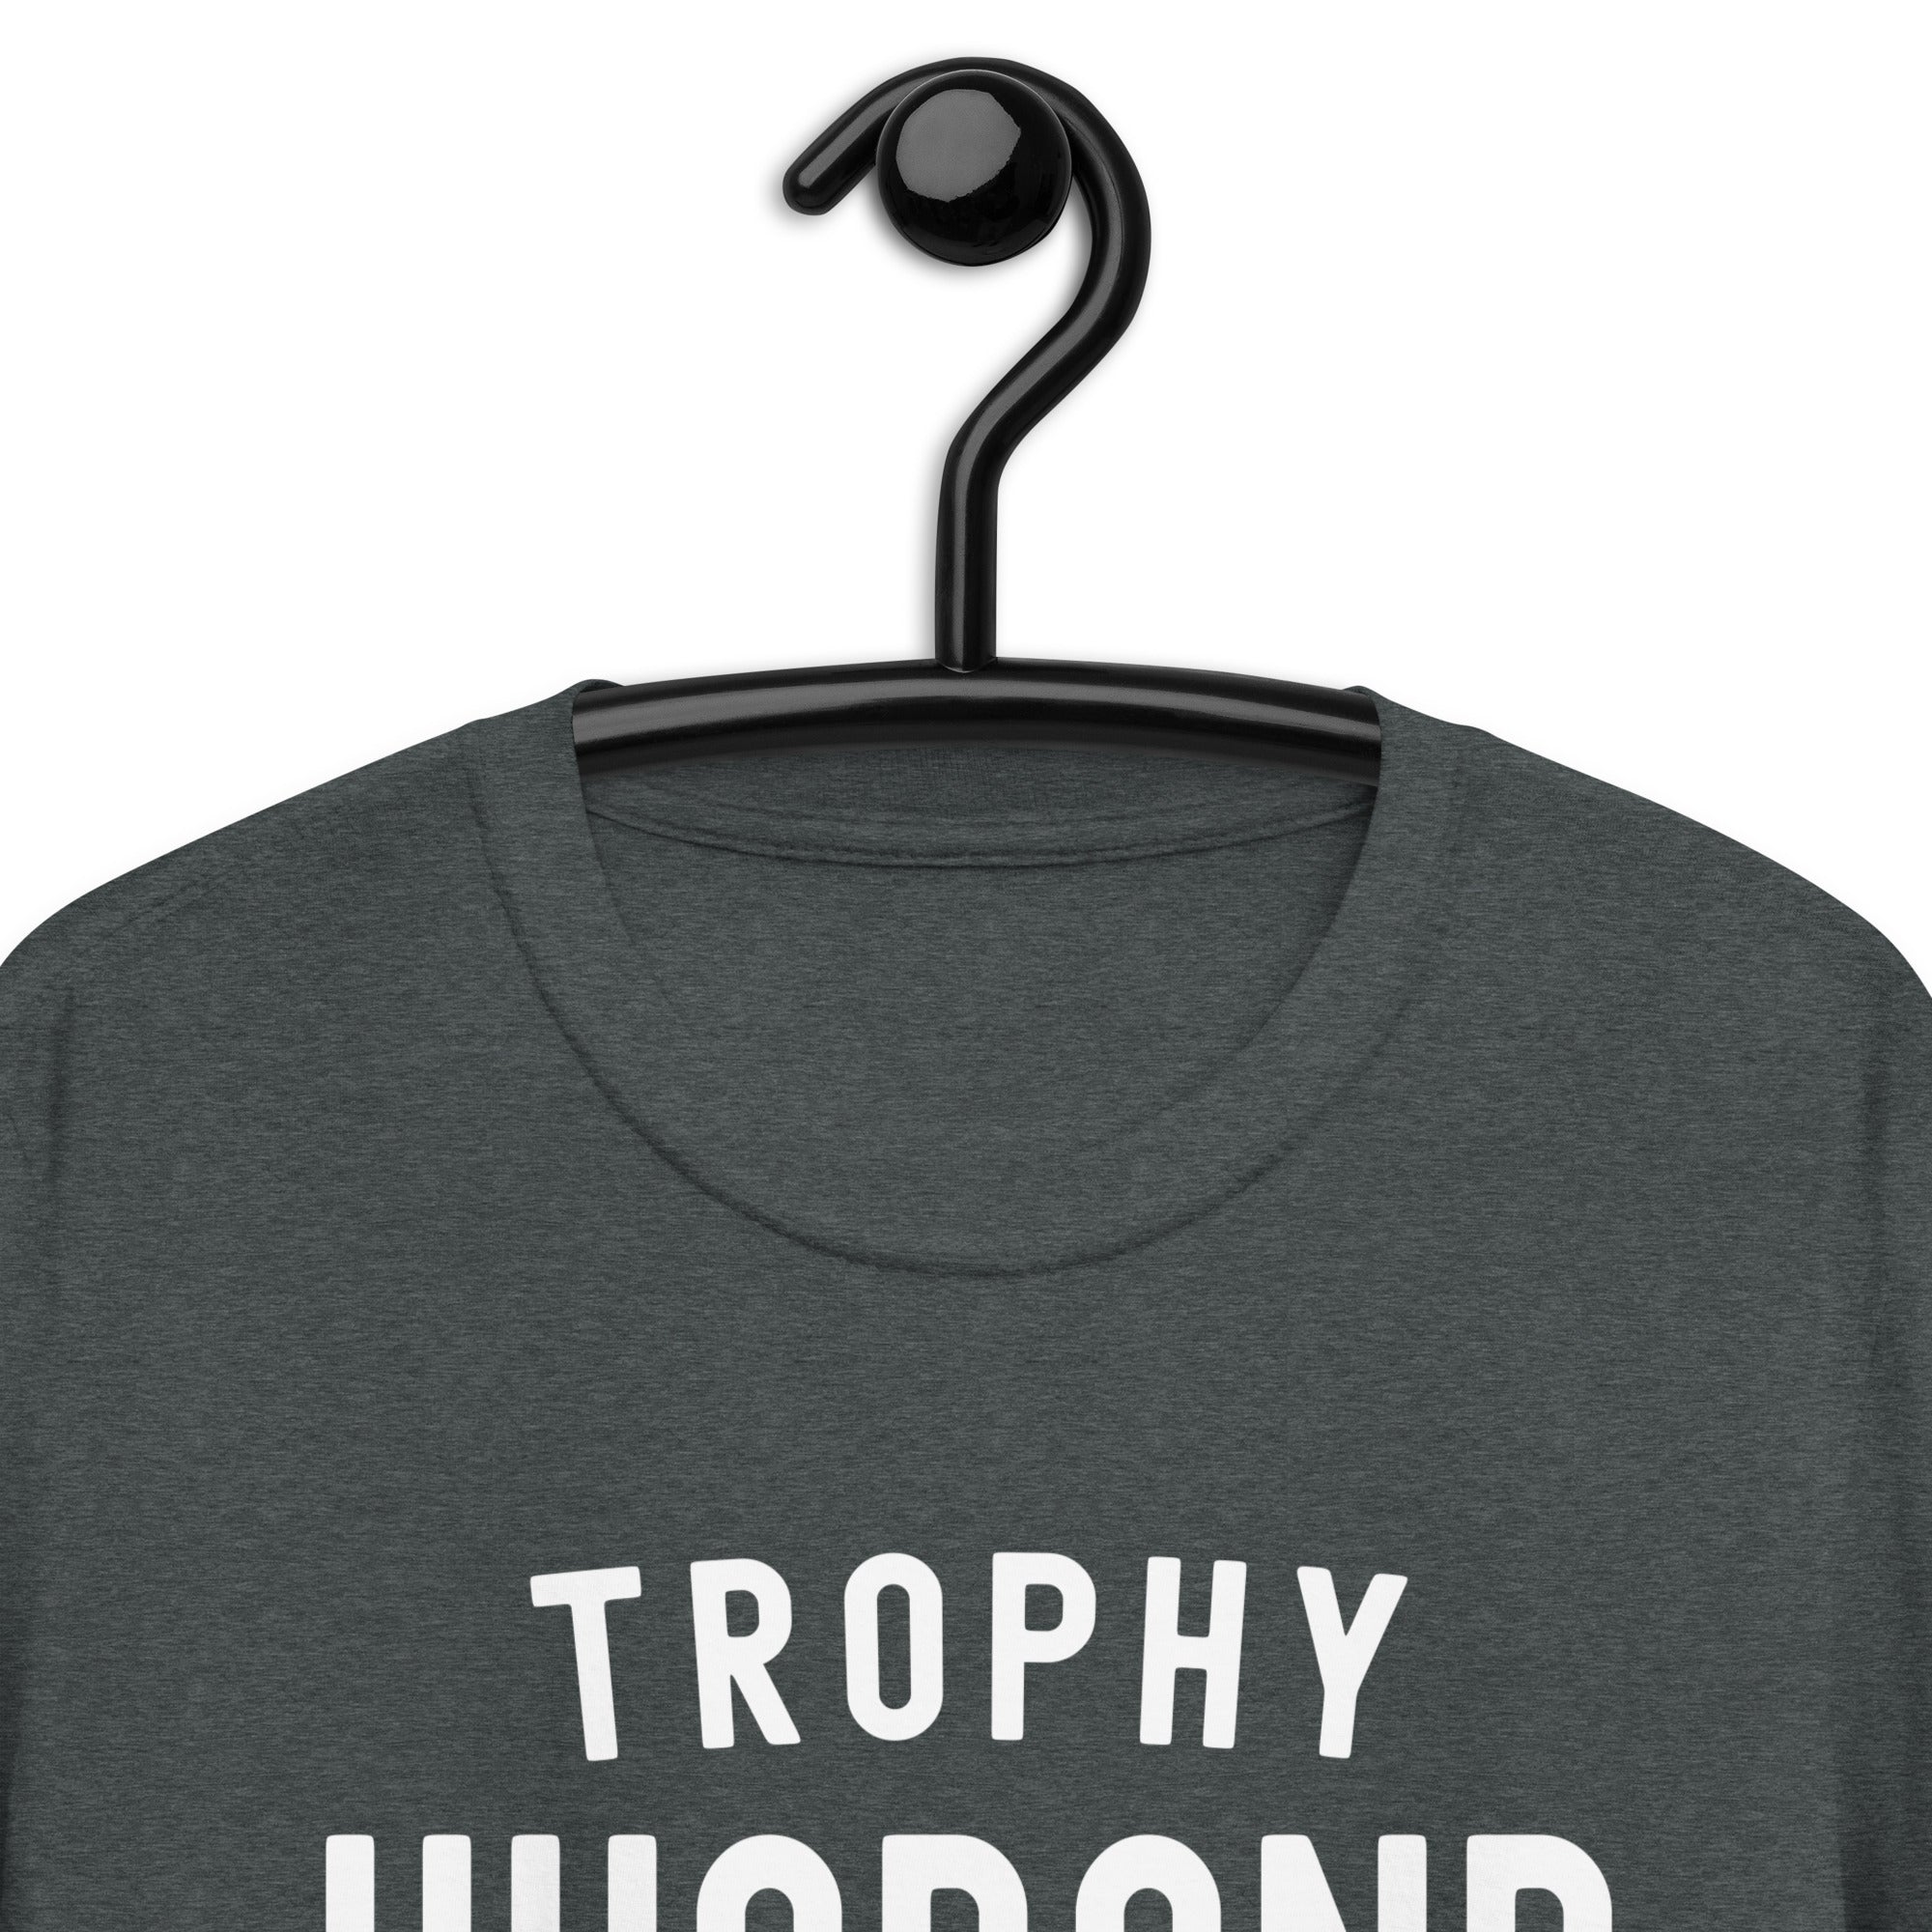 Short-Sleeve Unisex T-Shirt | Trophy Husband